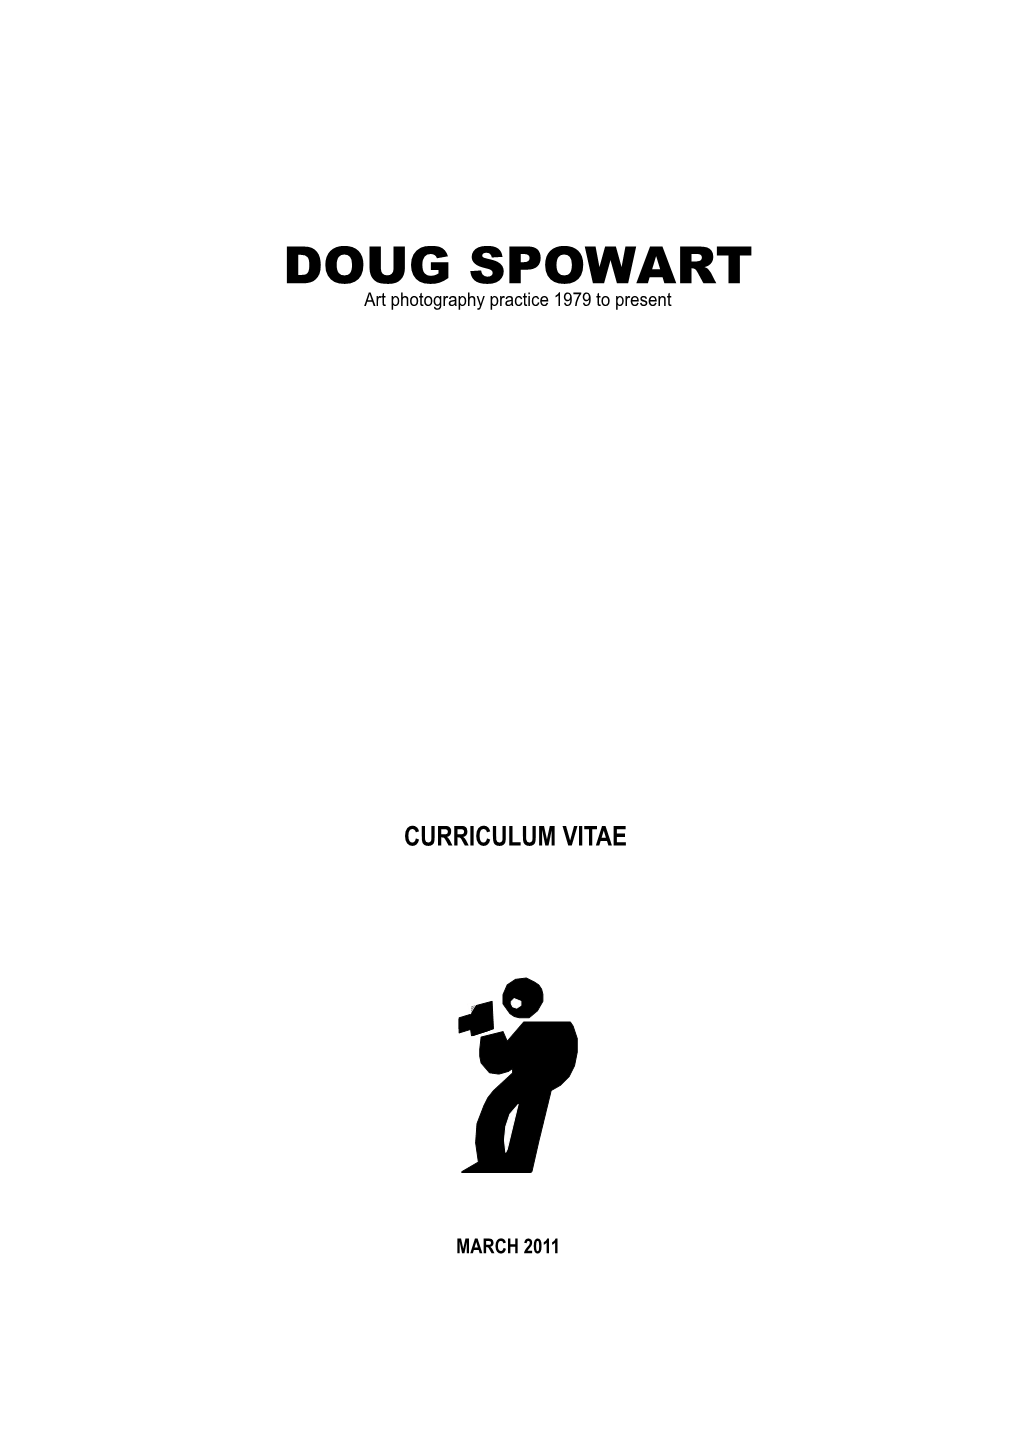 DOUG SPOWART Art Photography Practice 1979 to Present